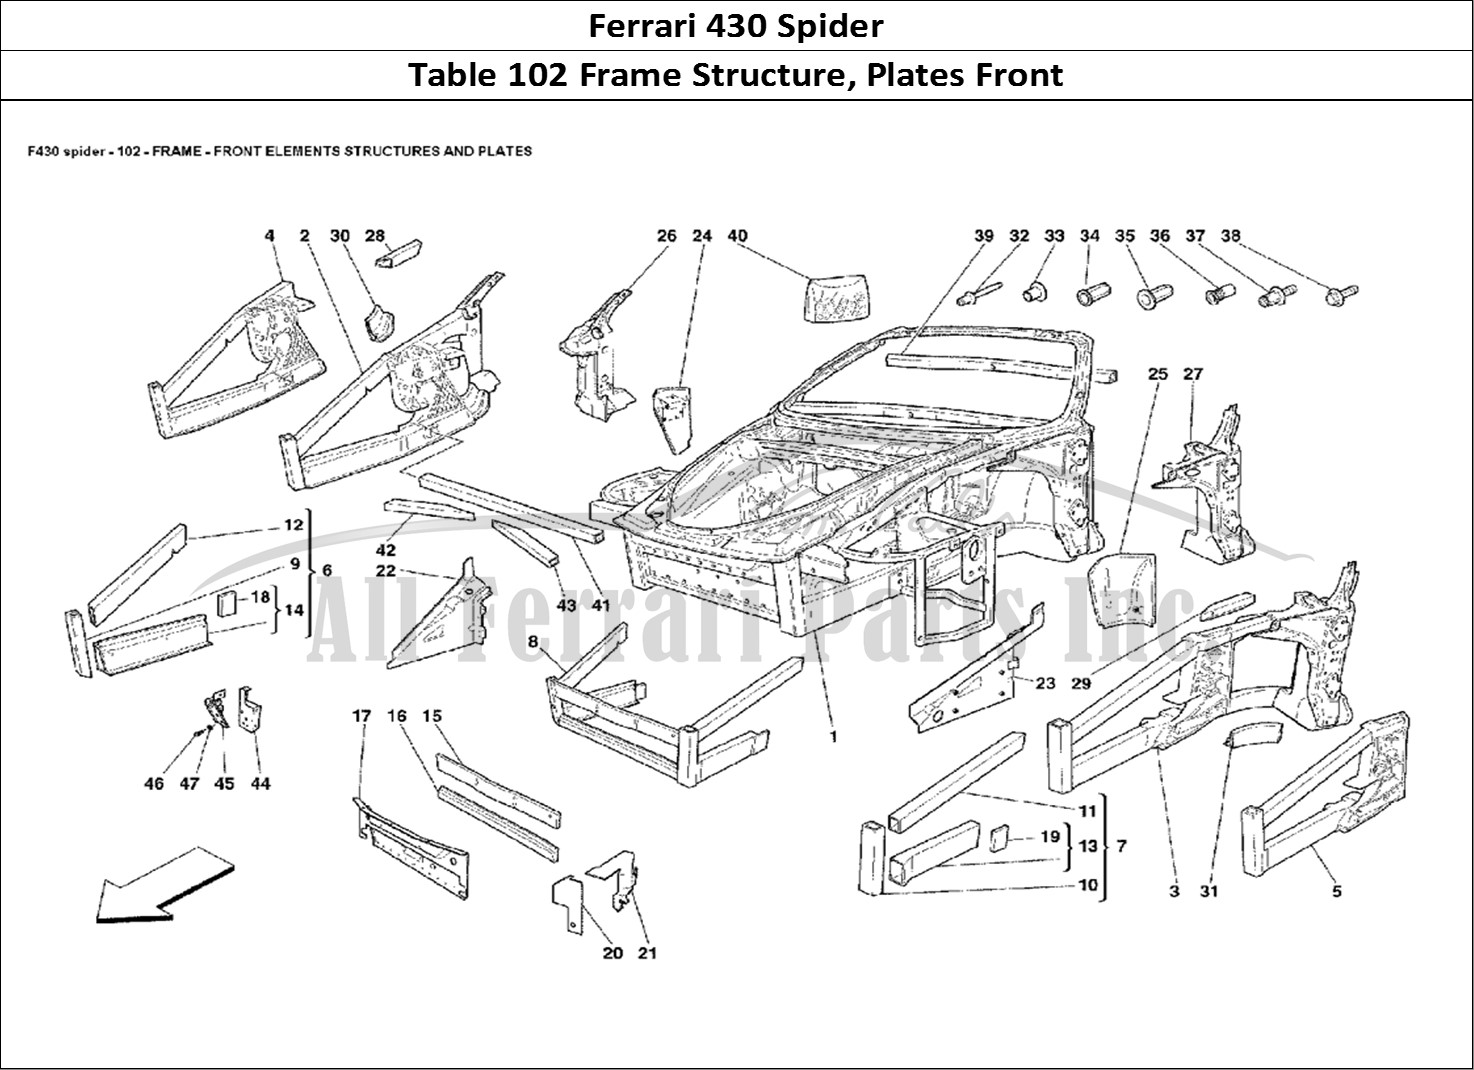 Ferrari Parts Ferrari 430 Spider Page 102 Frame - Front Elements St